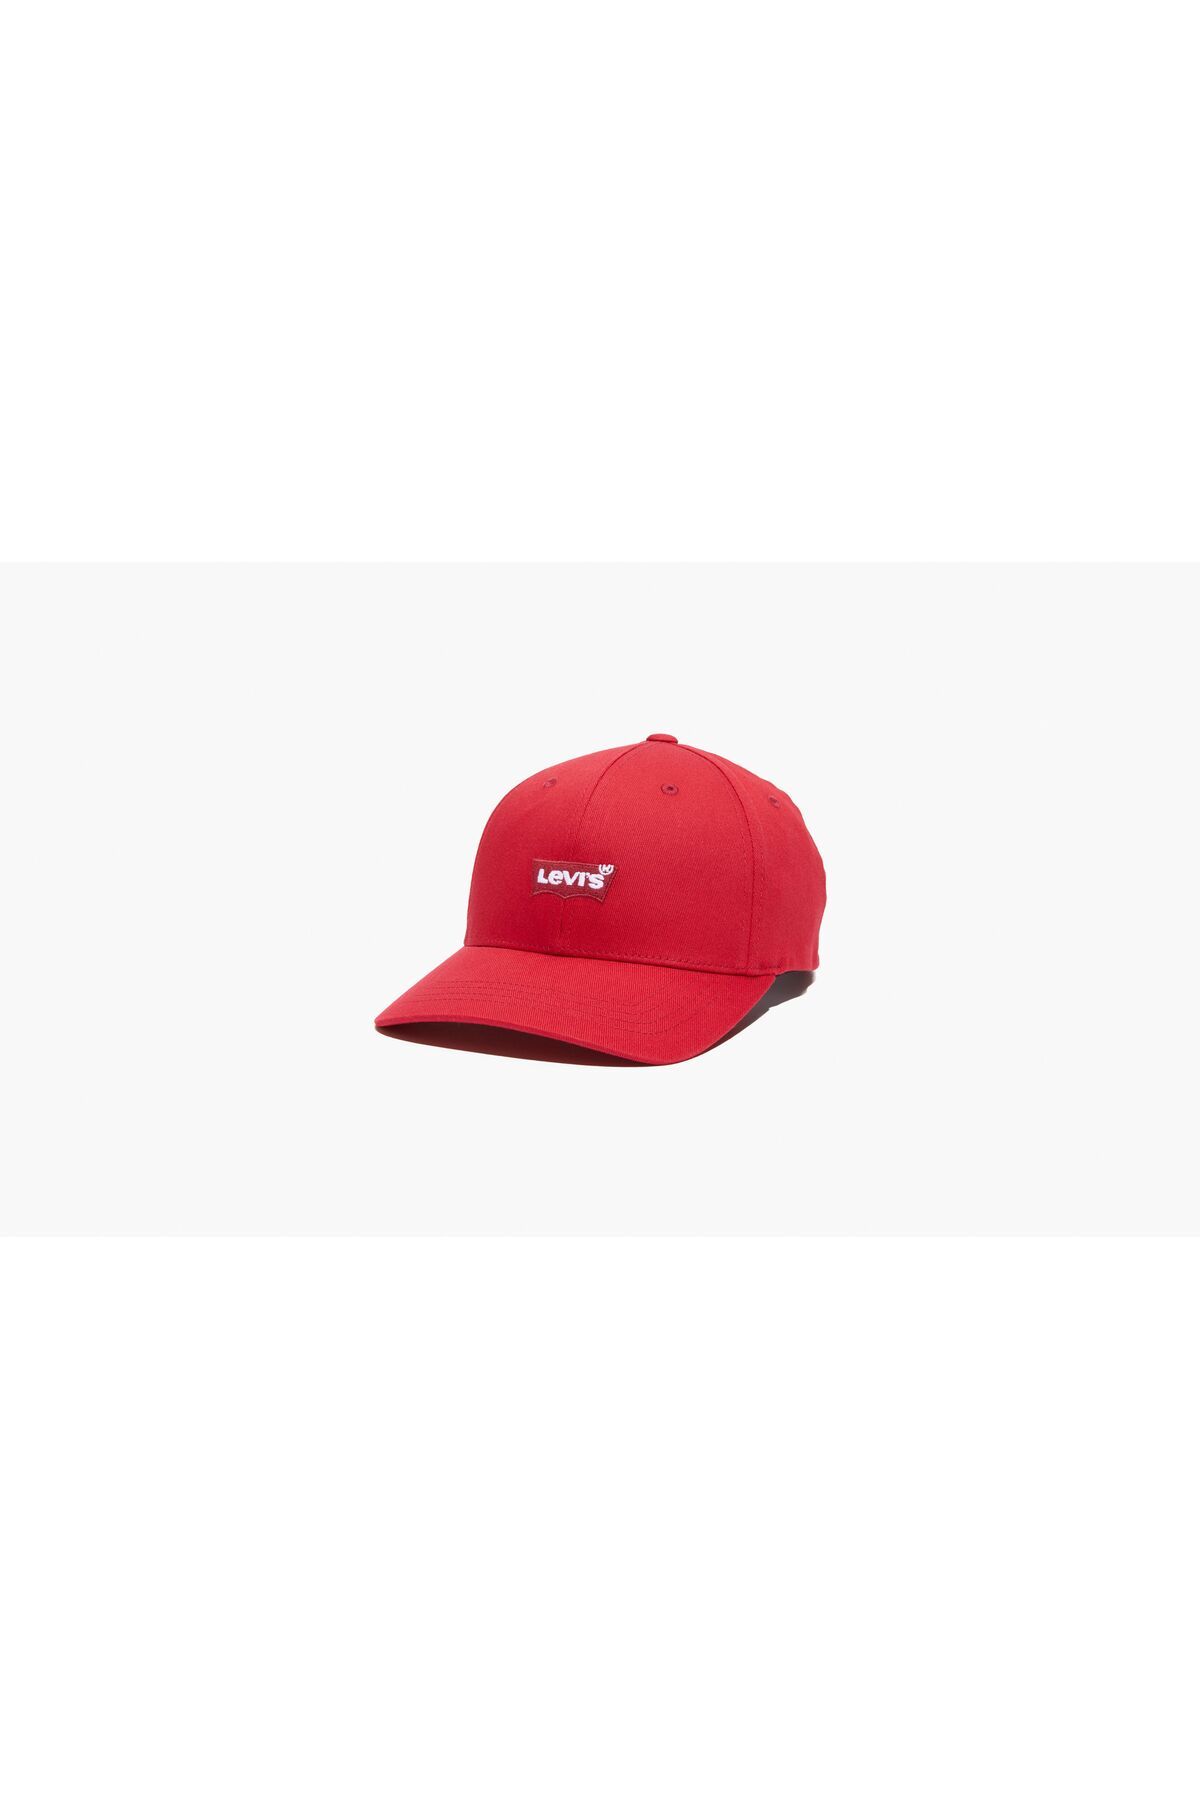 Levi's Kırmızı Şapka 38021-0270